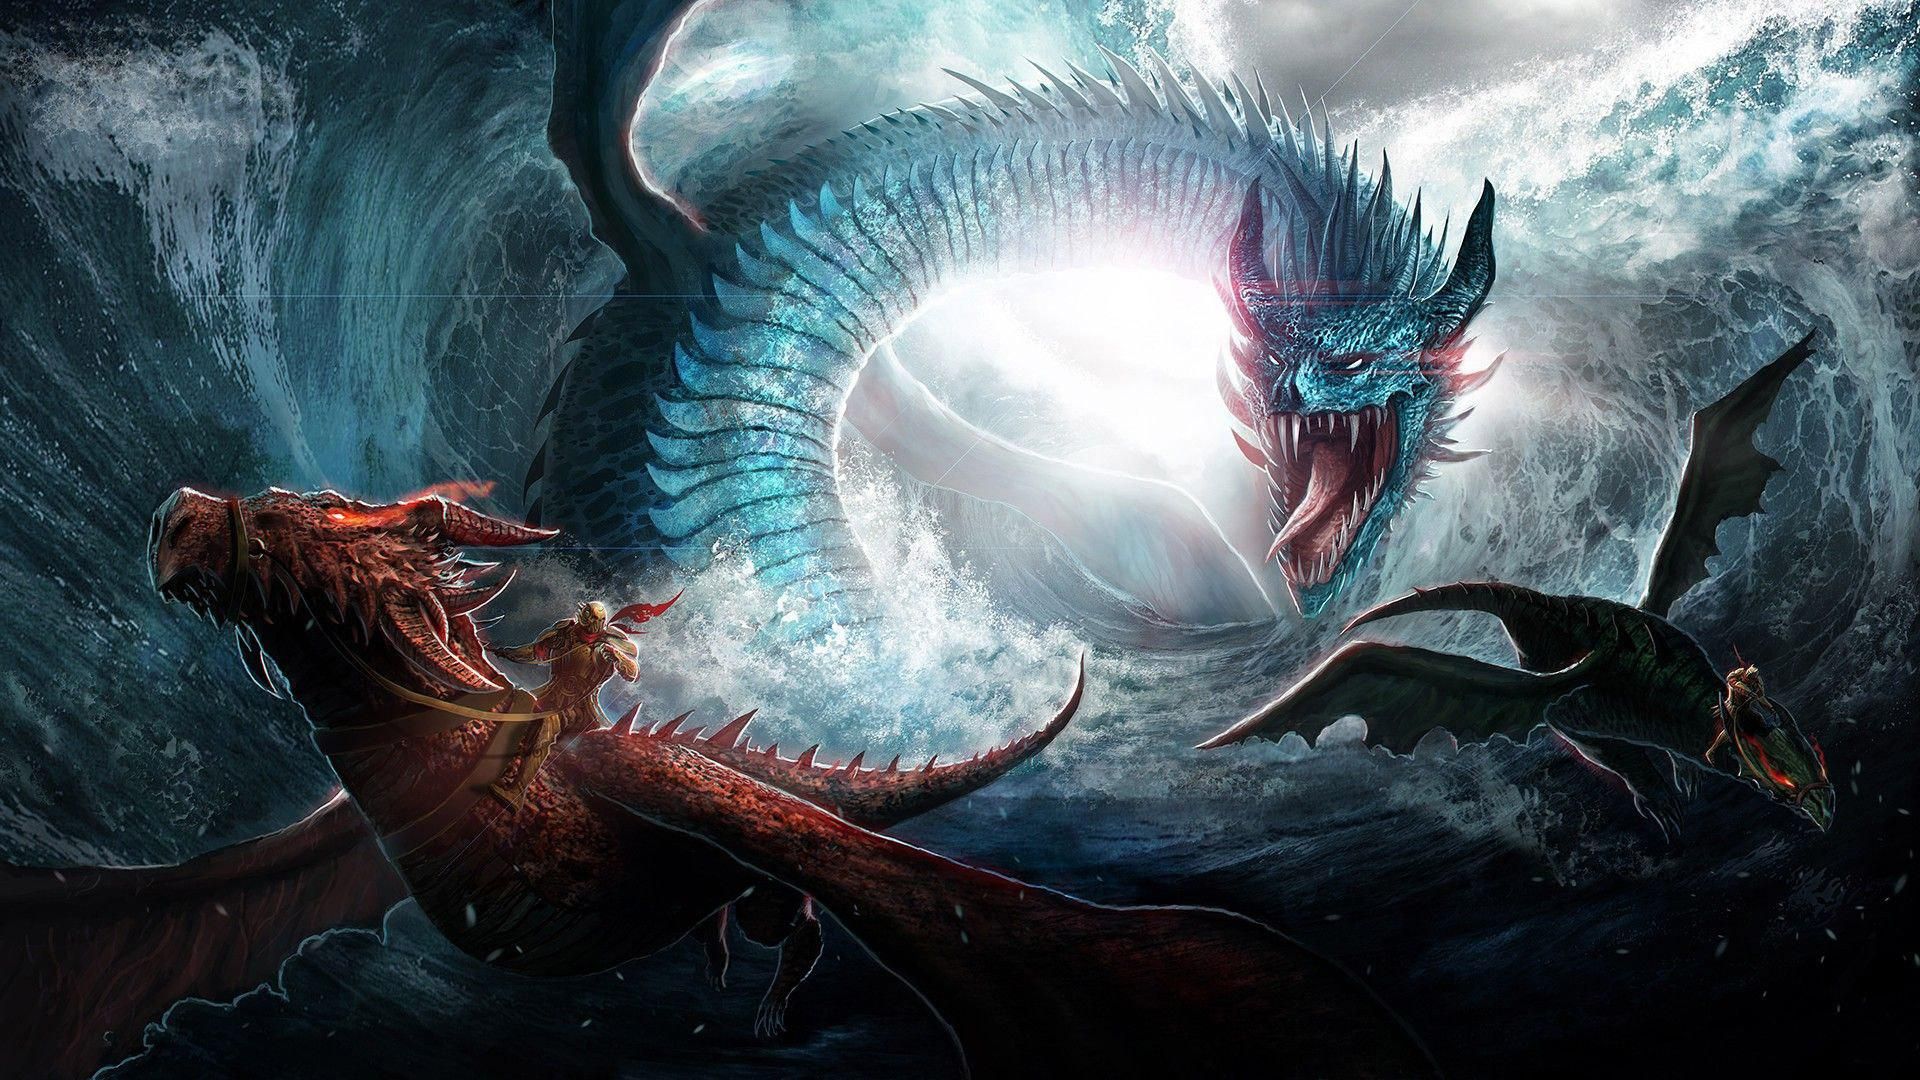 Fantasy Creatures Wallpaper - Game Of Thrones 3 Dragons - HD Wallpaper 